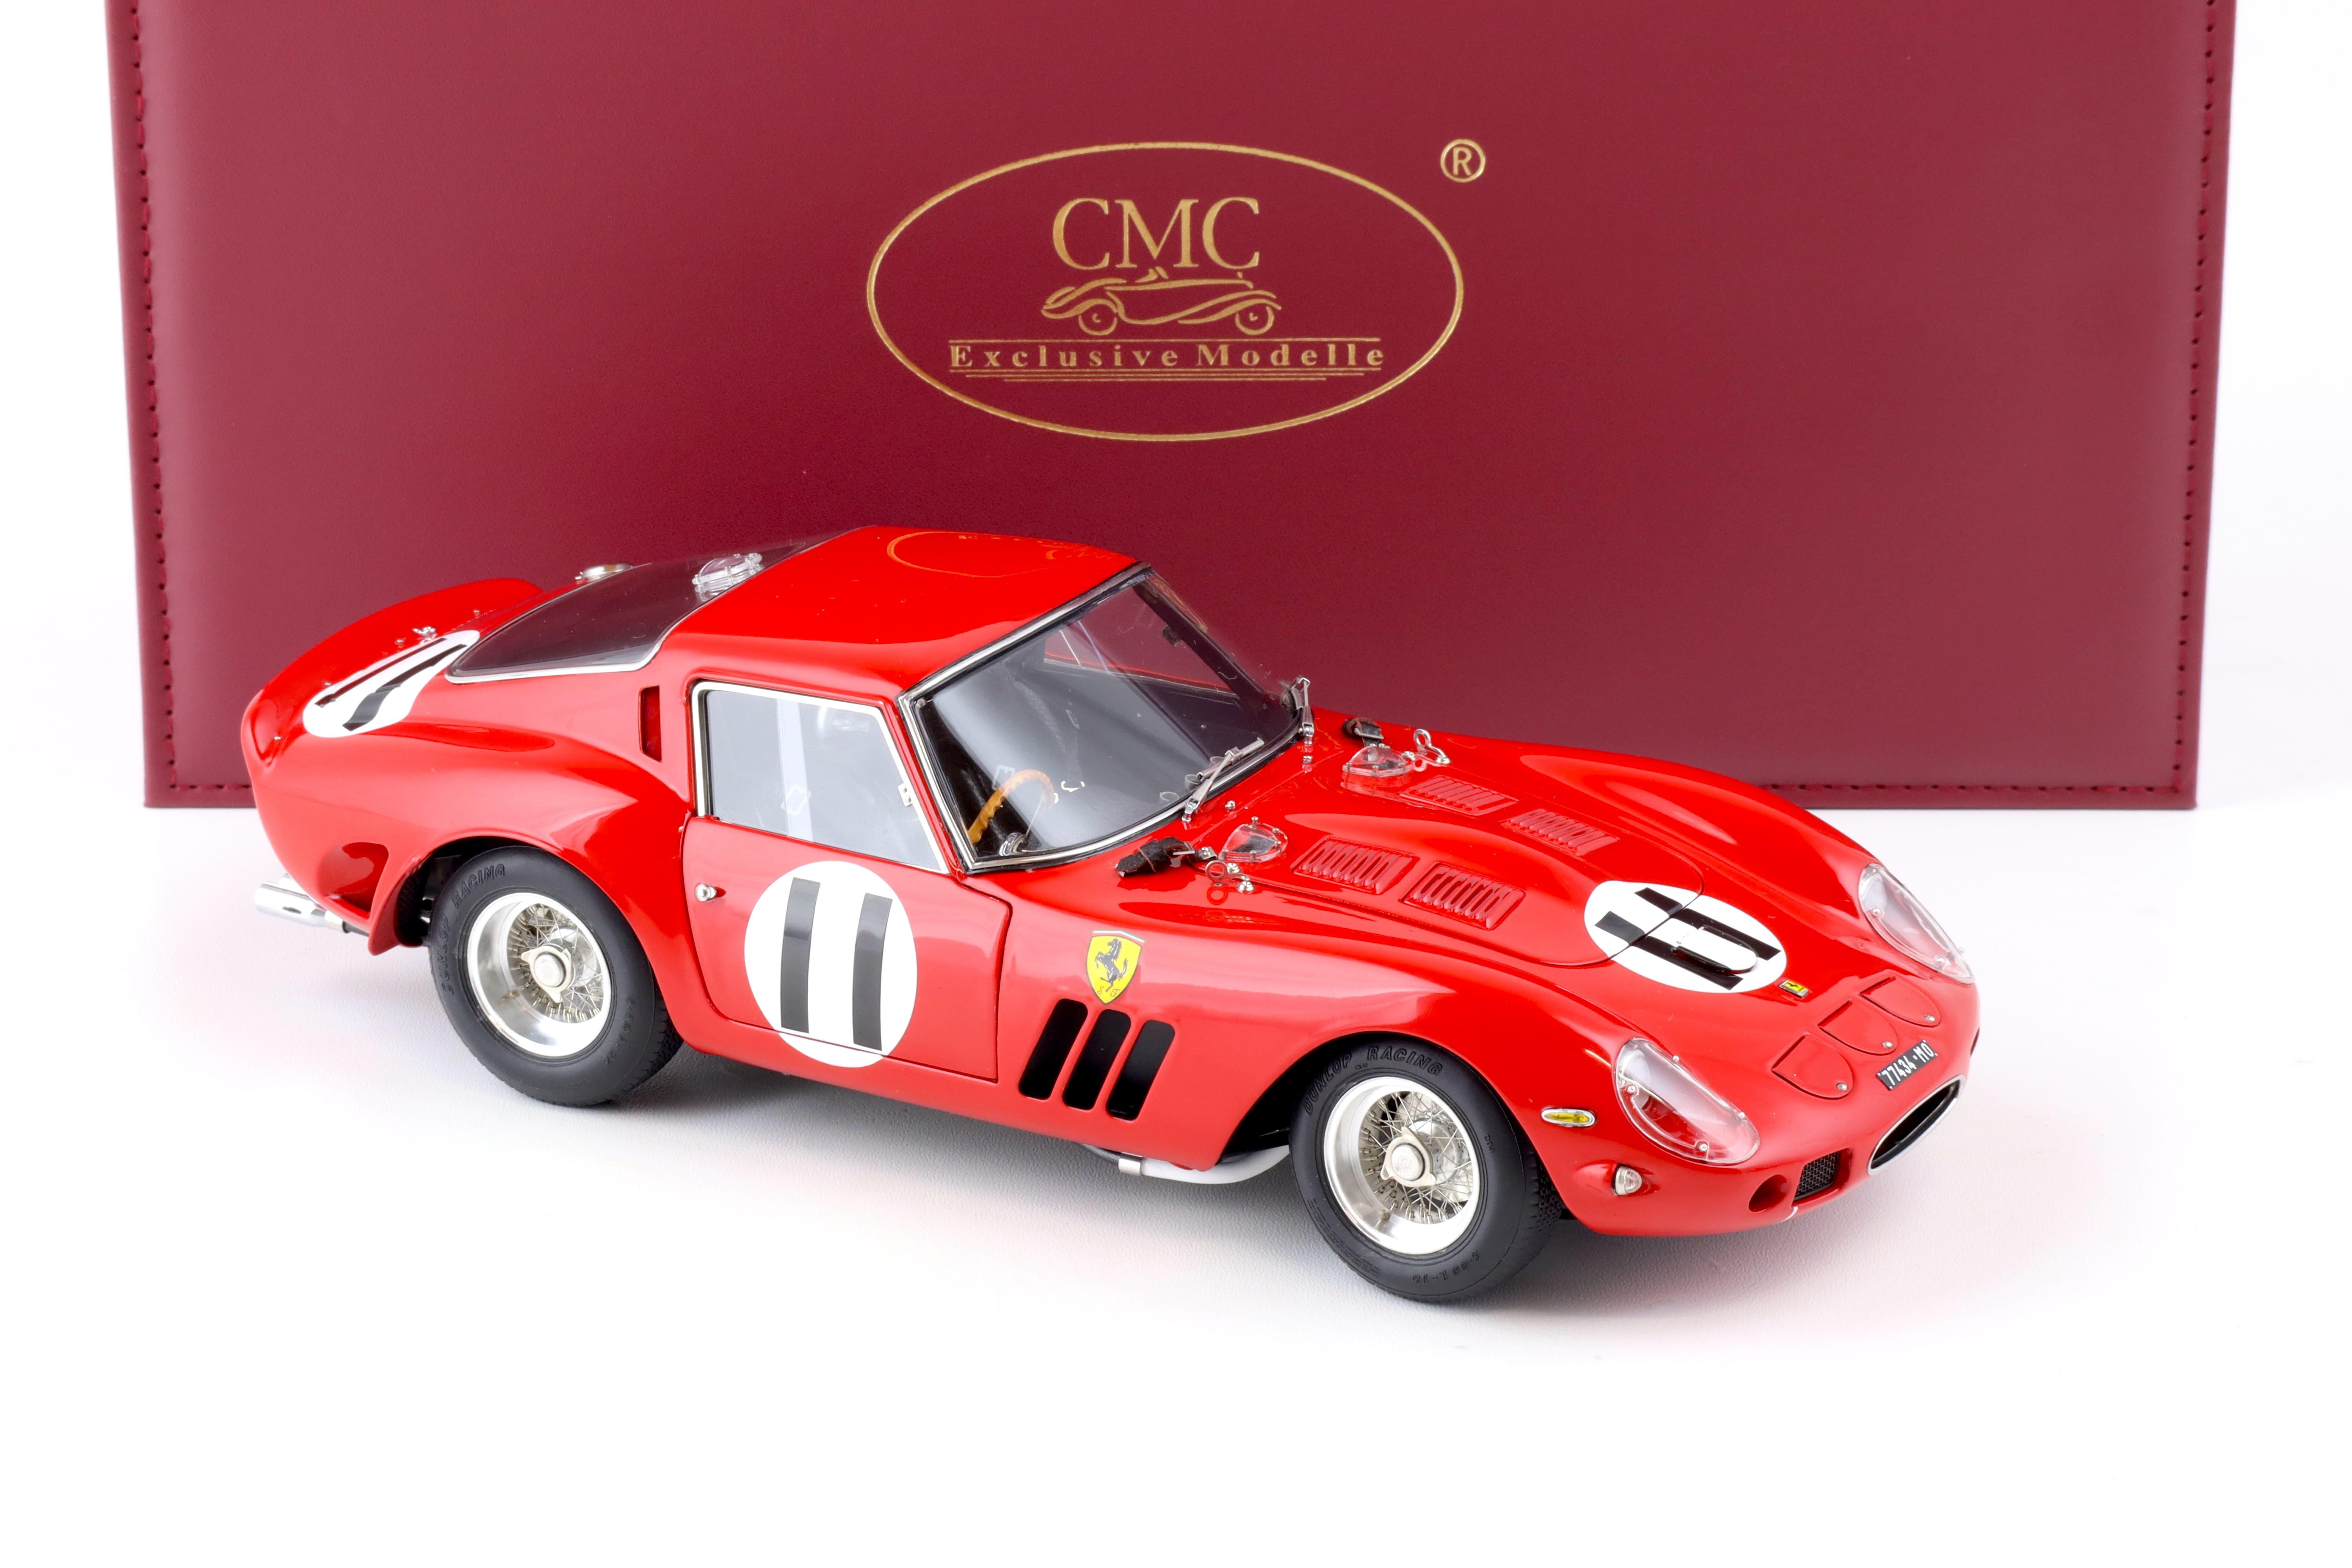 1:18 CMC Ferrari 250 GTO RHD 1000 km Paris 1962 Montlhery #11 Surtess/ Parkes M-249